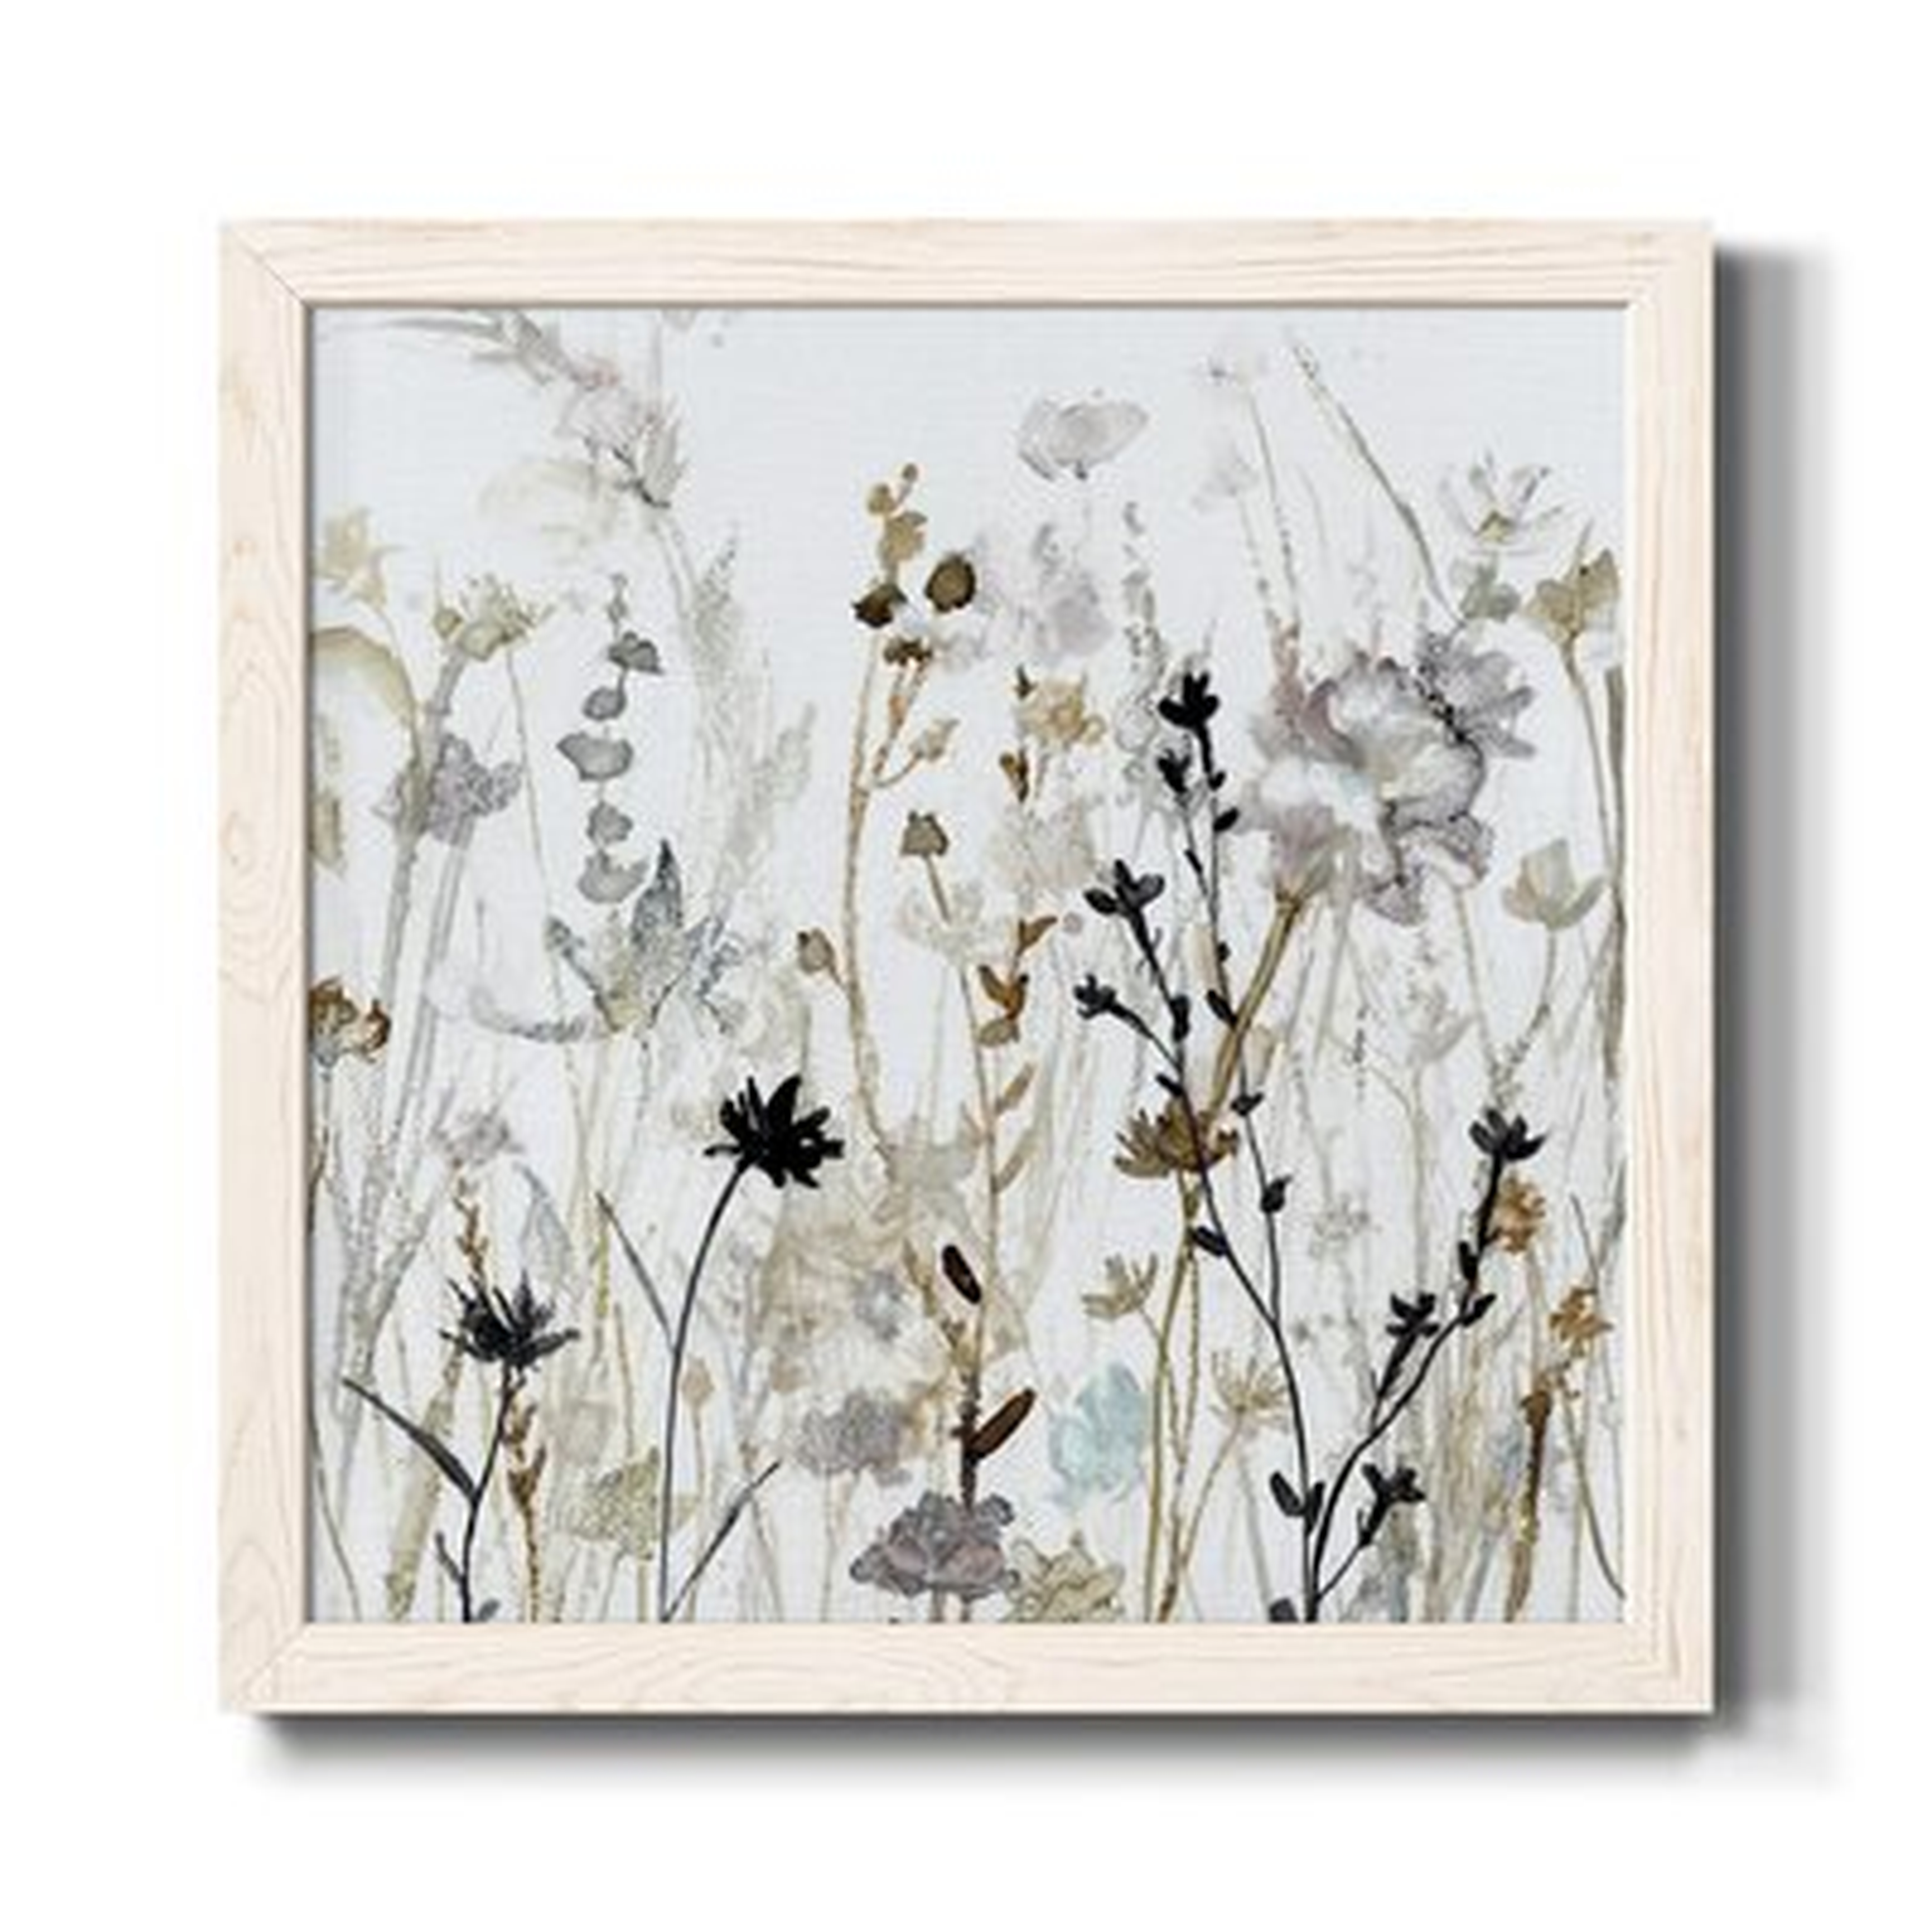 Wildflower Mist II by J Paul - Picture Frame Painting Print on Paper - Wayfair